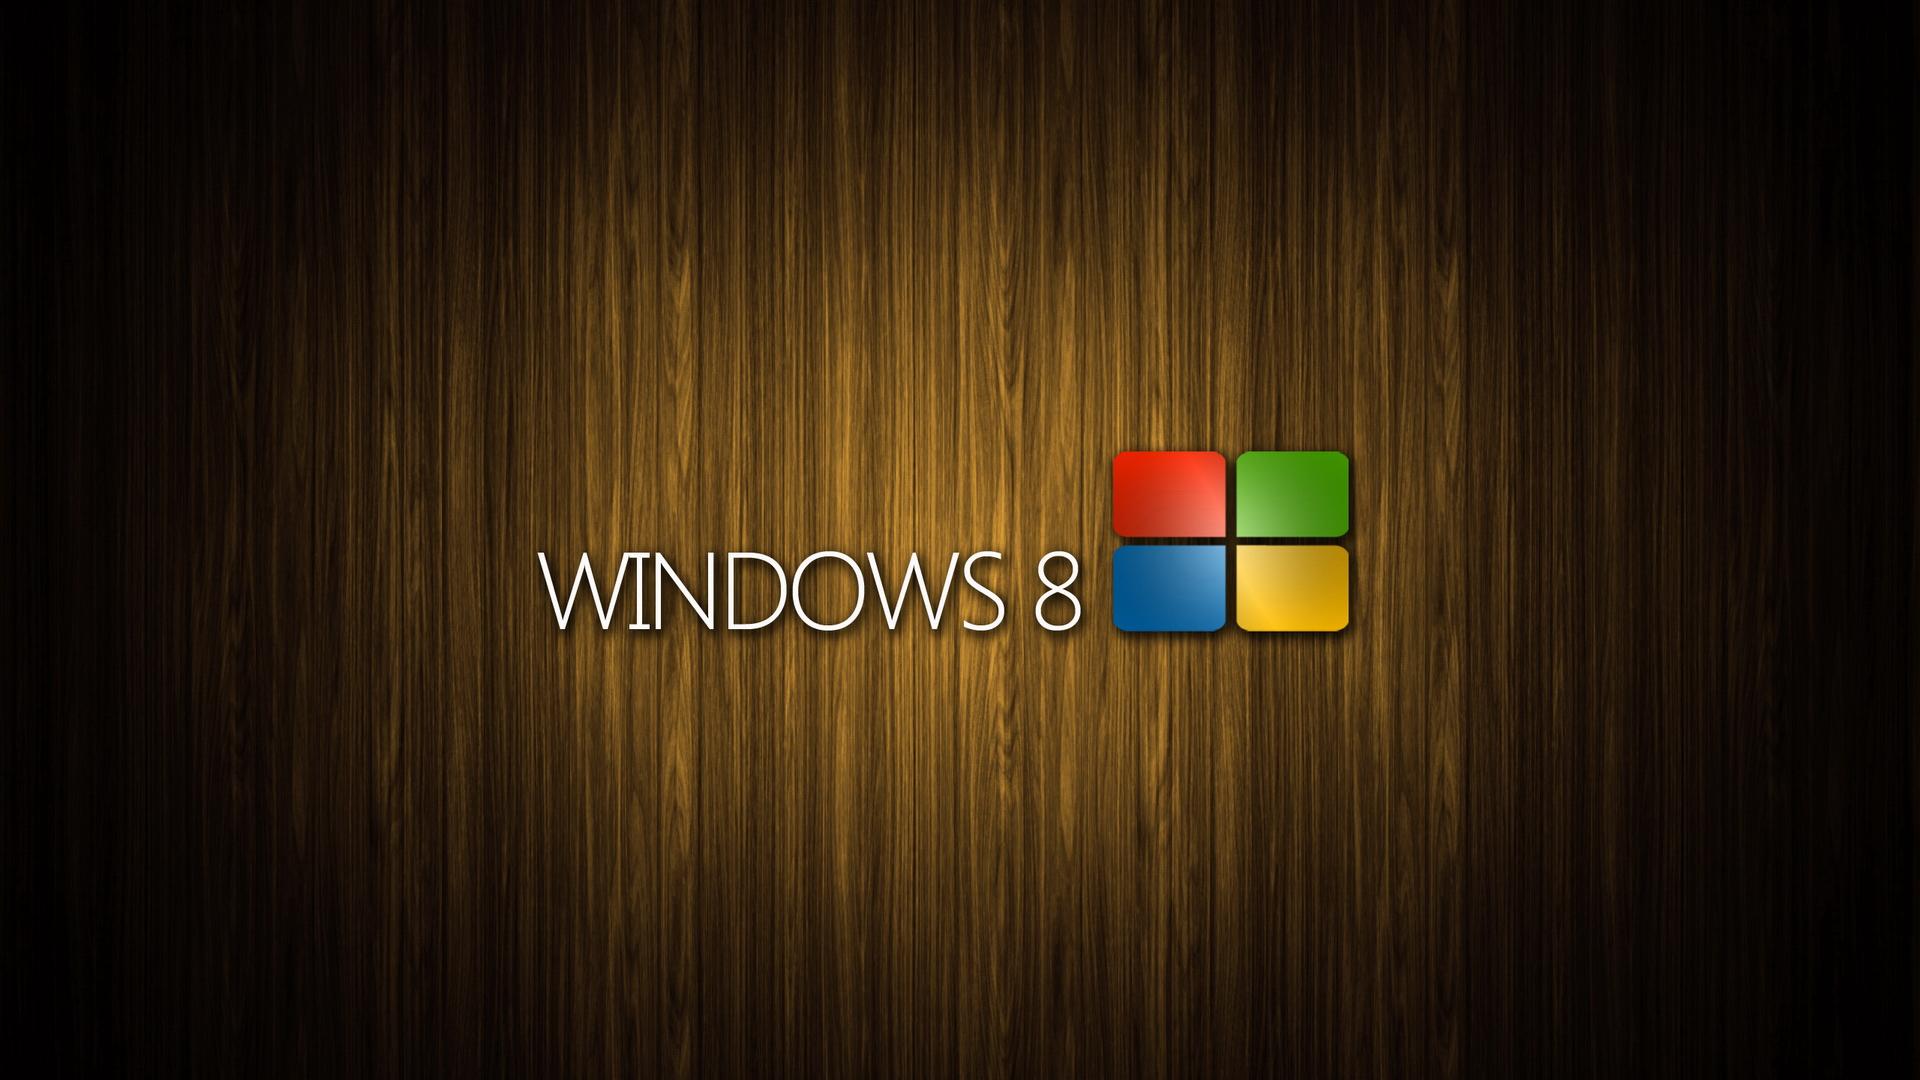 Windows 8 Wooden Image Wallpaper High Resolution